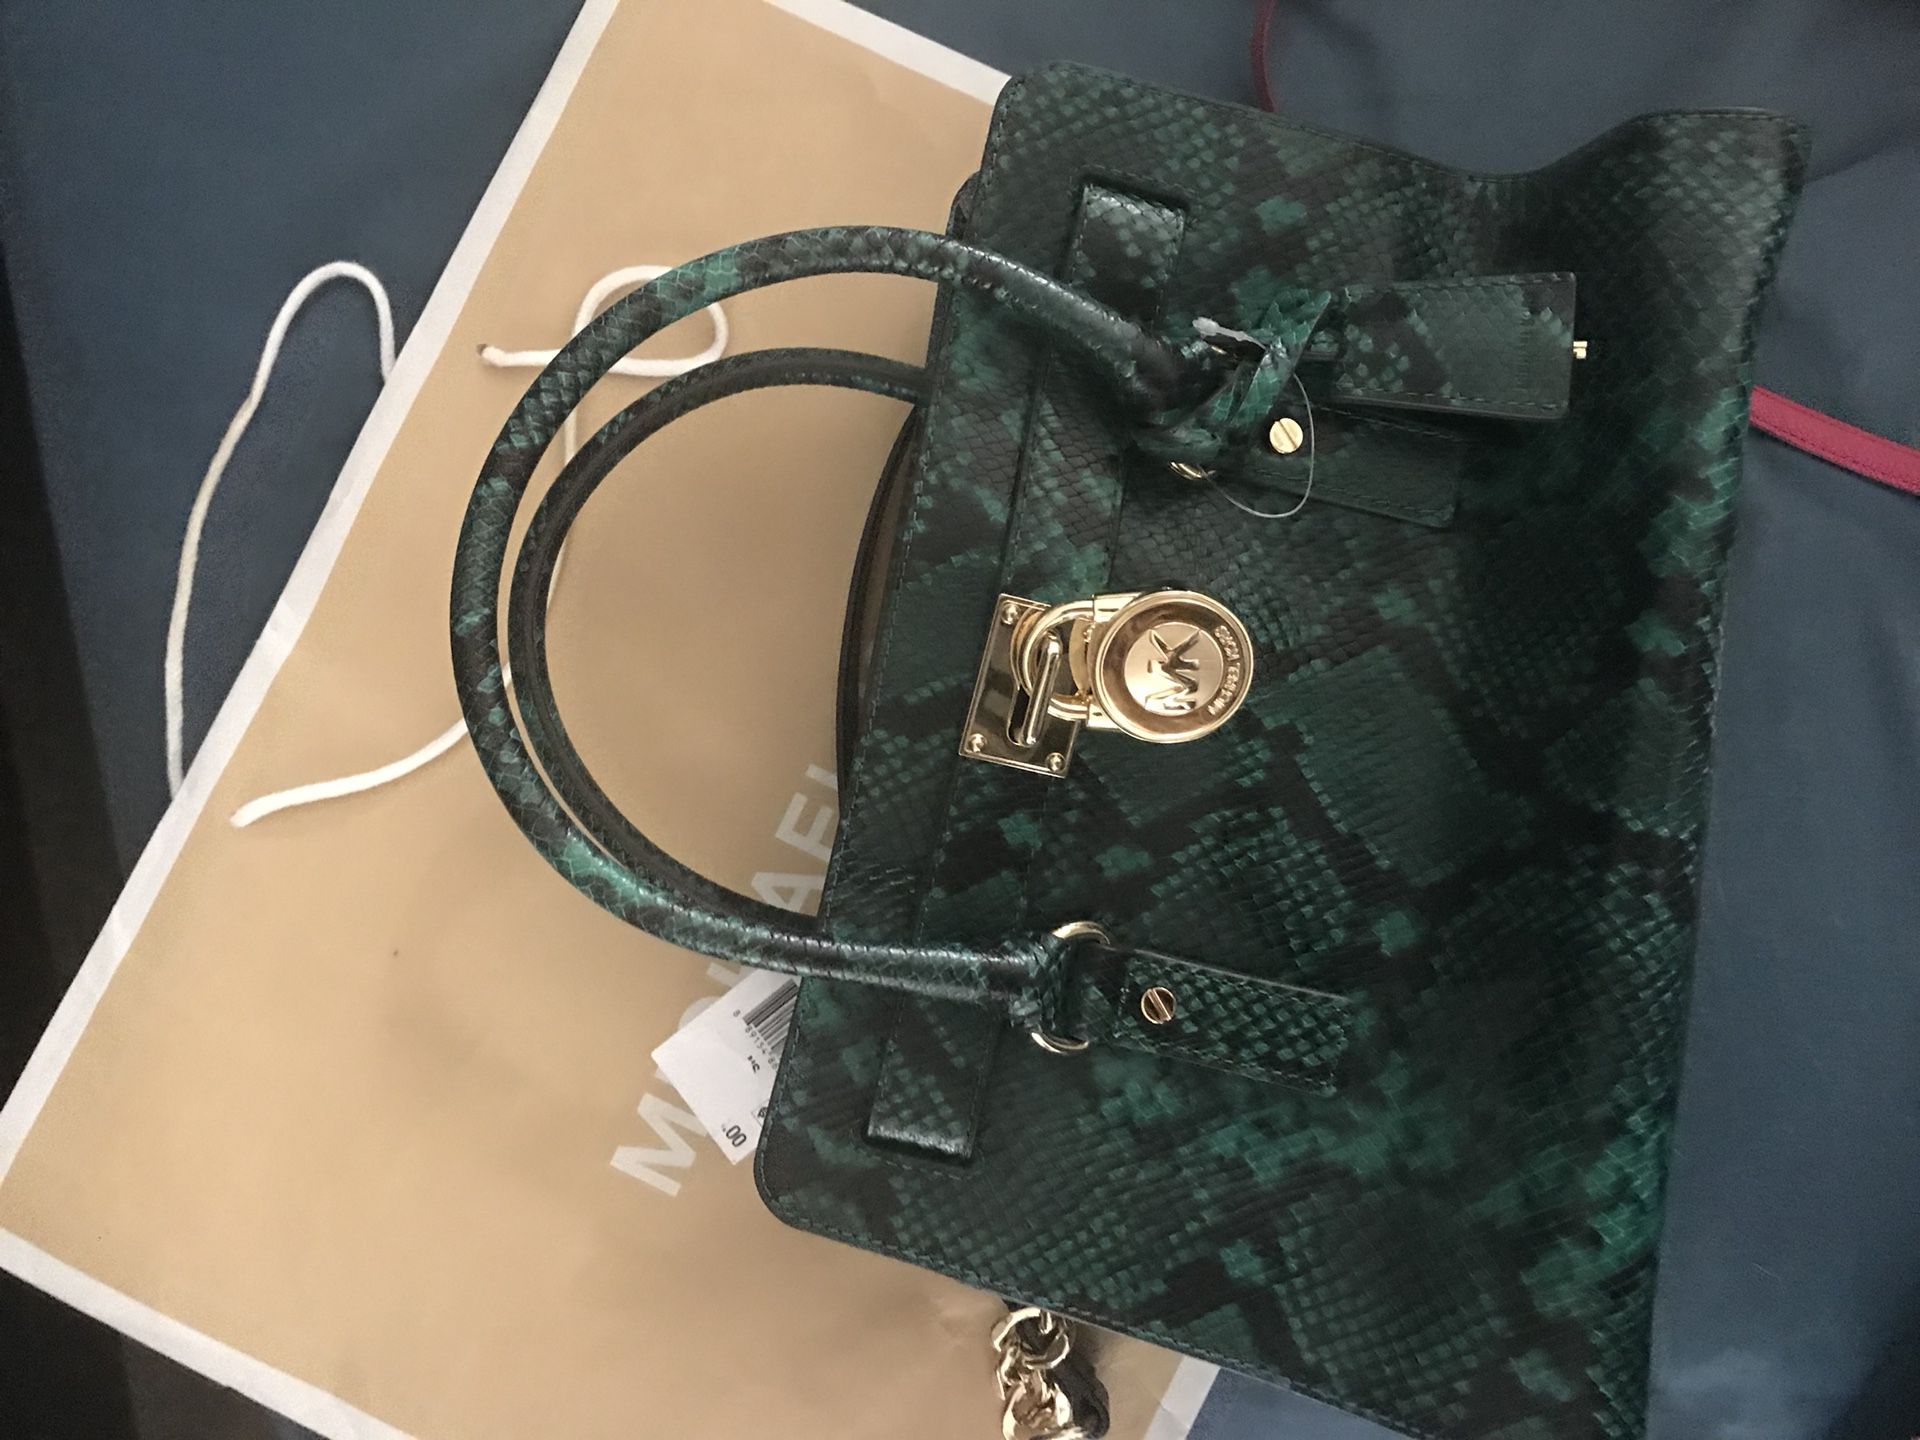 Guaranteed authentic Michael kors handbag python green